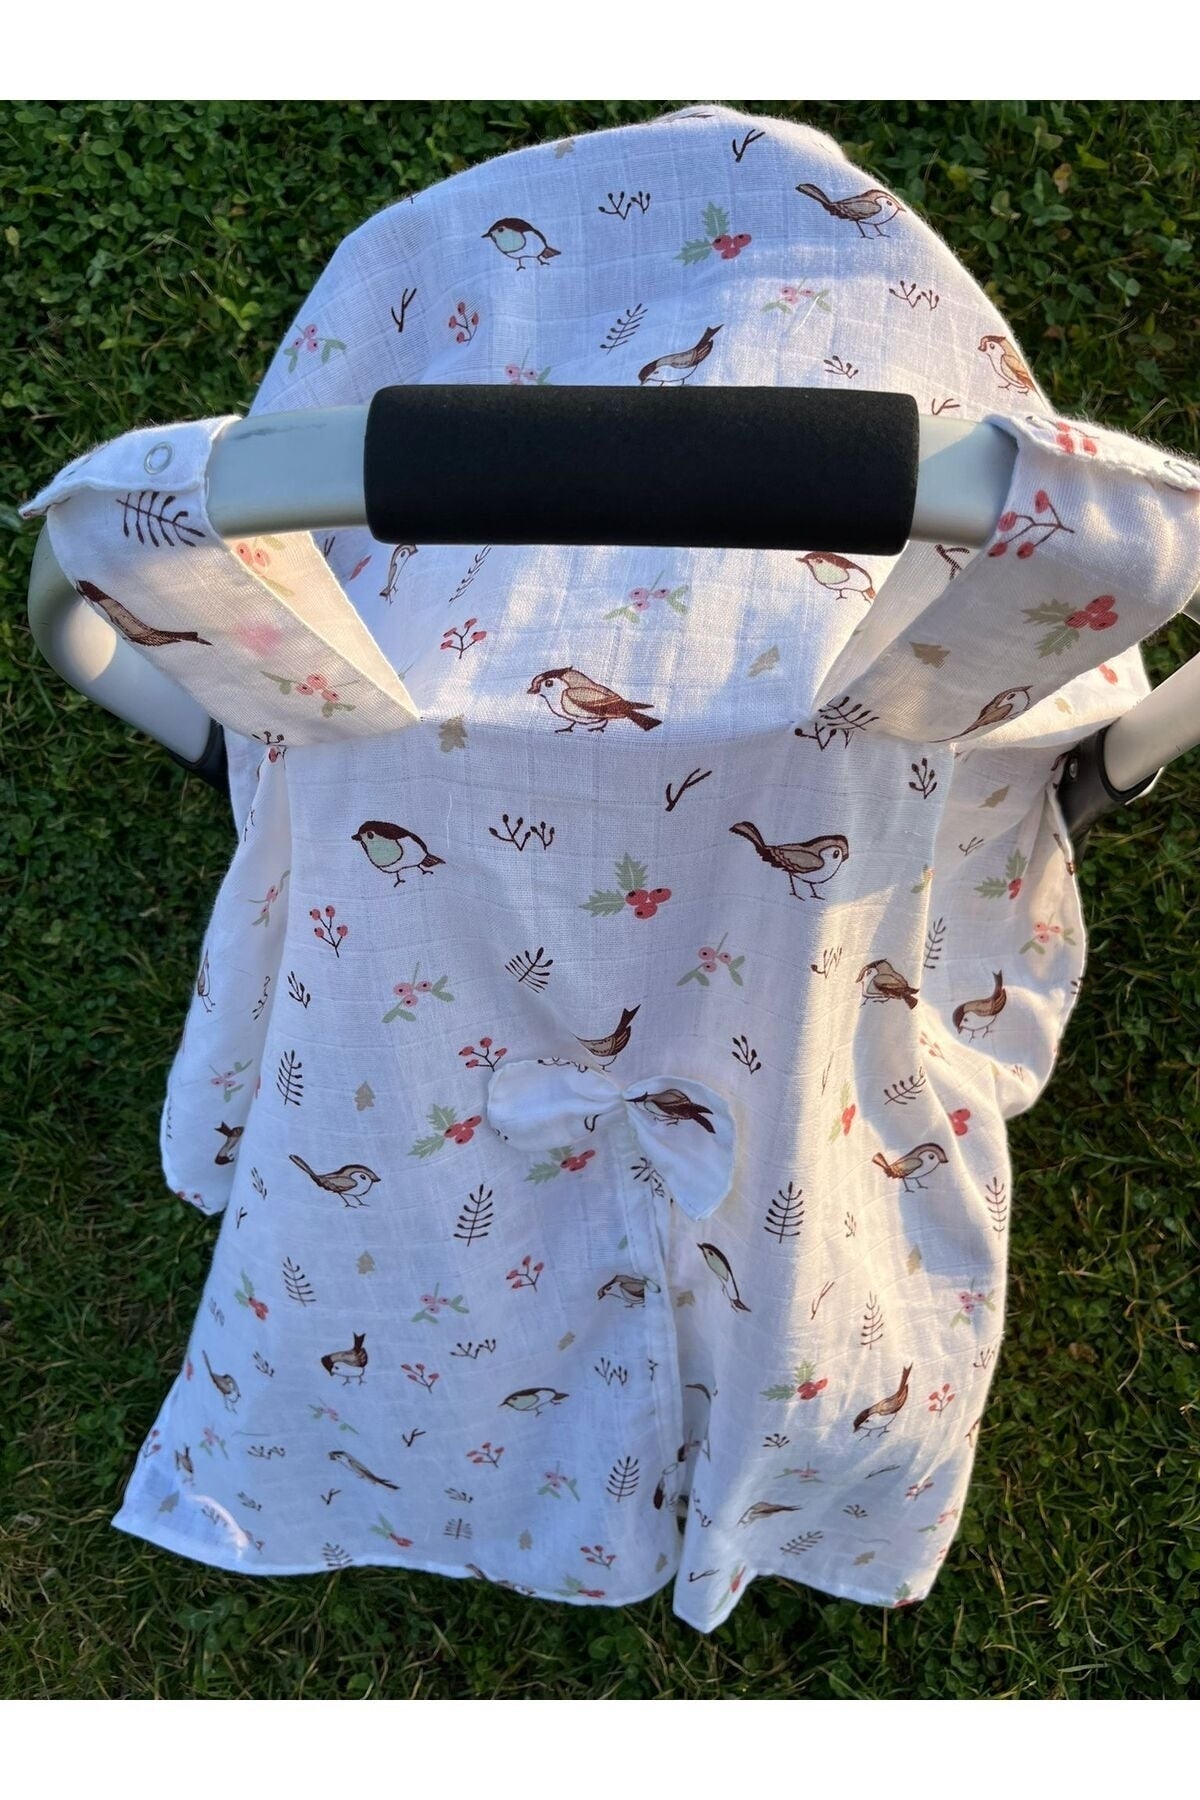 Run Baby Muslin Fabric Snap Snap Stroller Cover (BIRD PATTERNED) 75x100cm